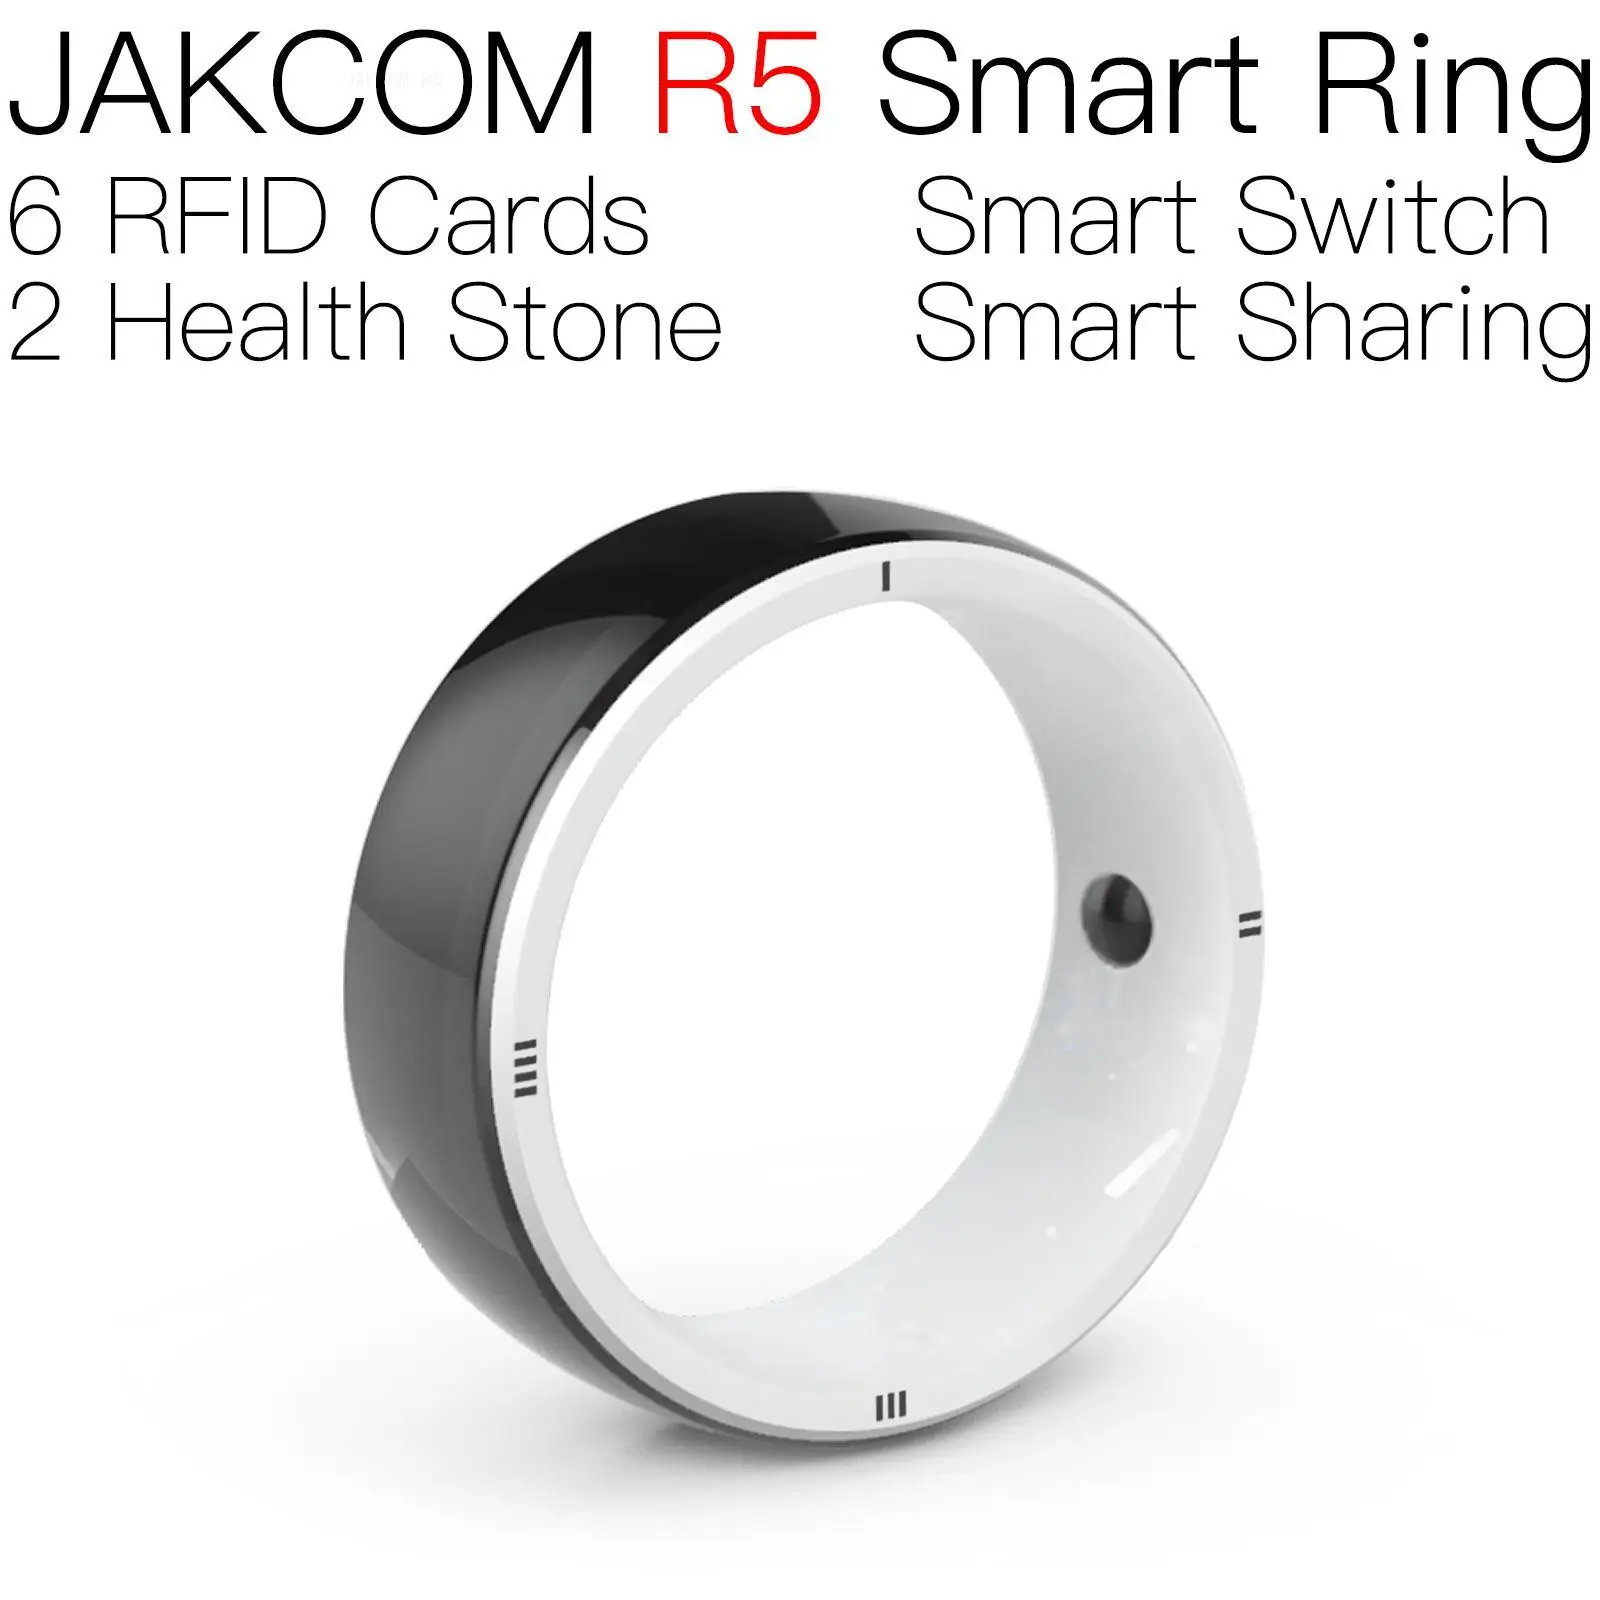 

JAKCOM R5 Smart Ring Super value as material emblem smart rfid air tag chip nfc cards printer pet 125khz writable bracelet